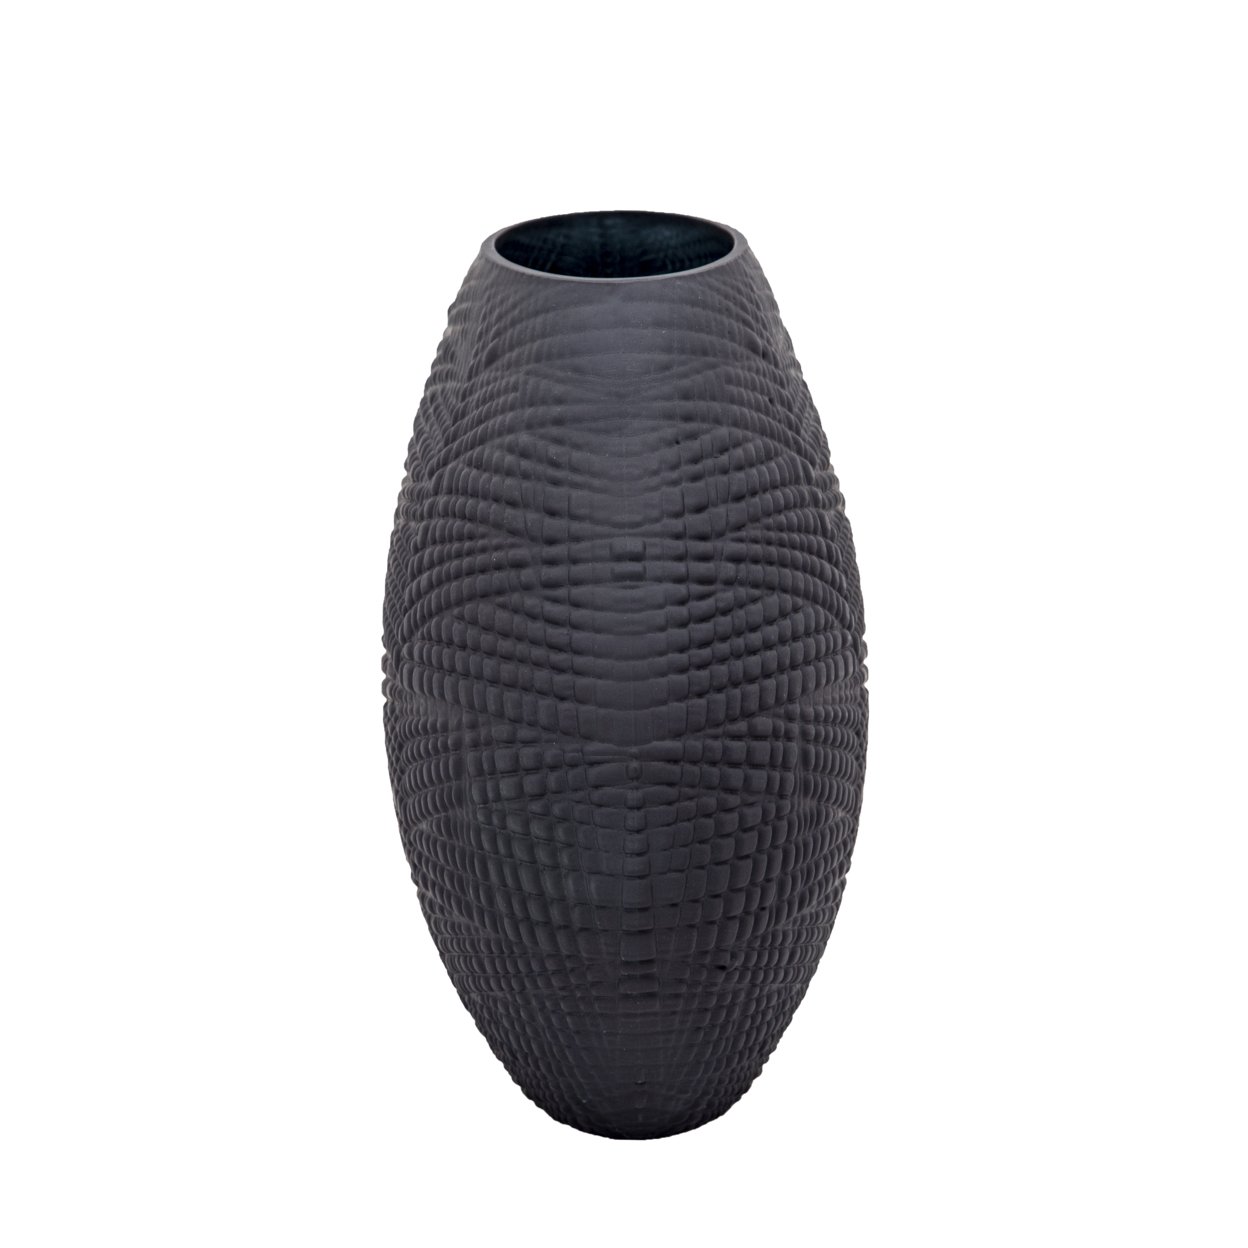 Glass Protruded Design Vase With Textured Details, Black- Saltoro Sherpi